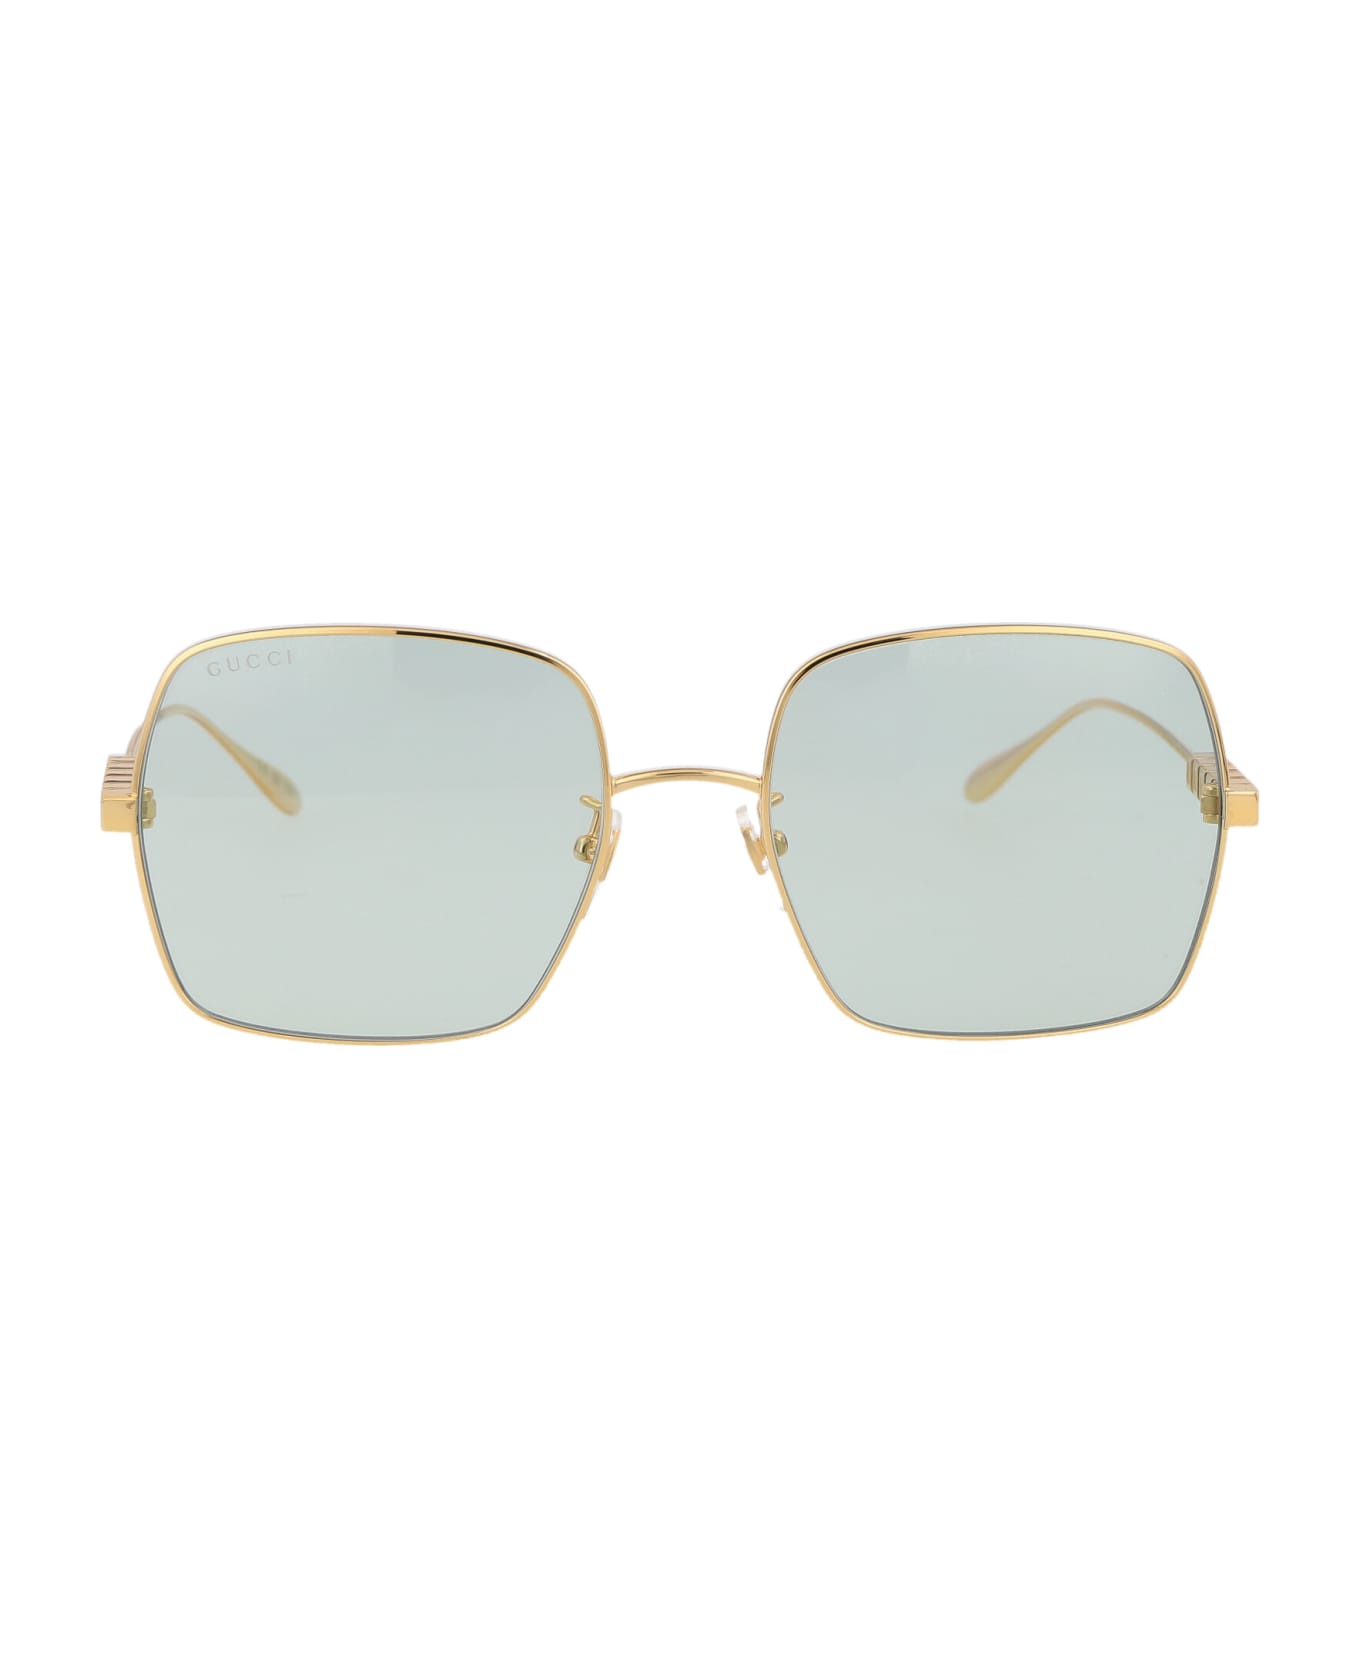 Gucci Eyewear Gg1434s Sunglasses - 003 GOLD GOLD GREEN